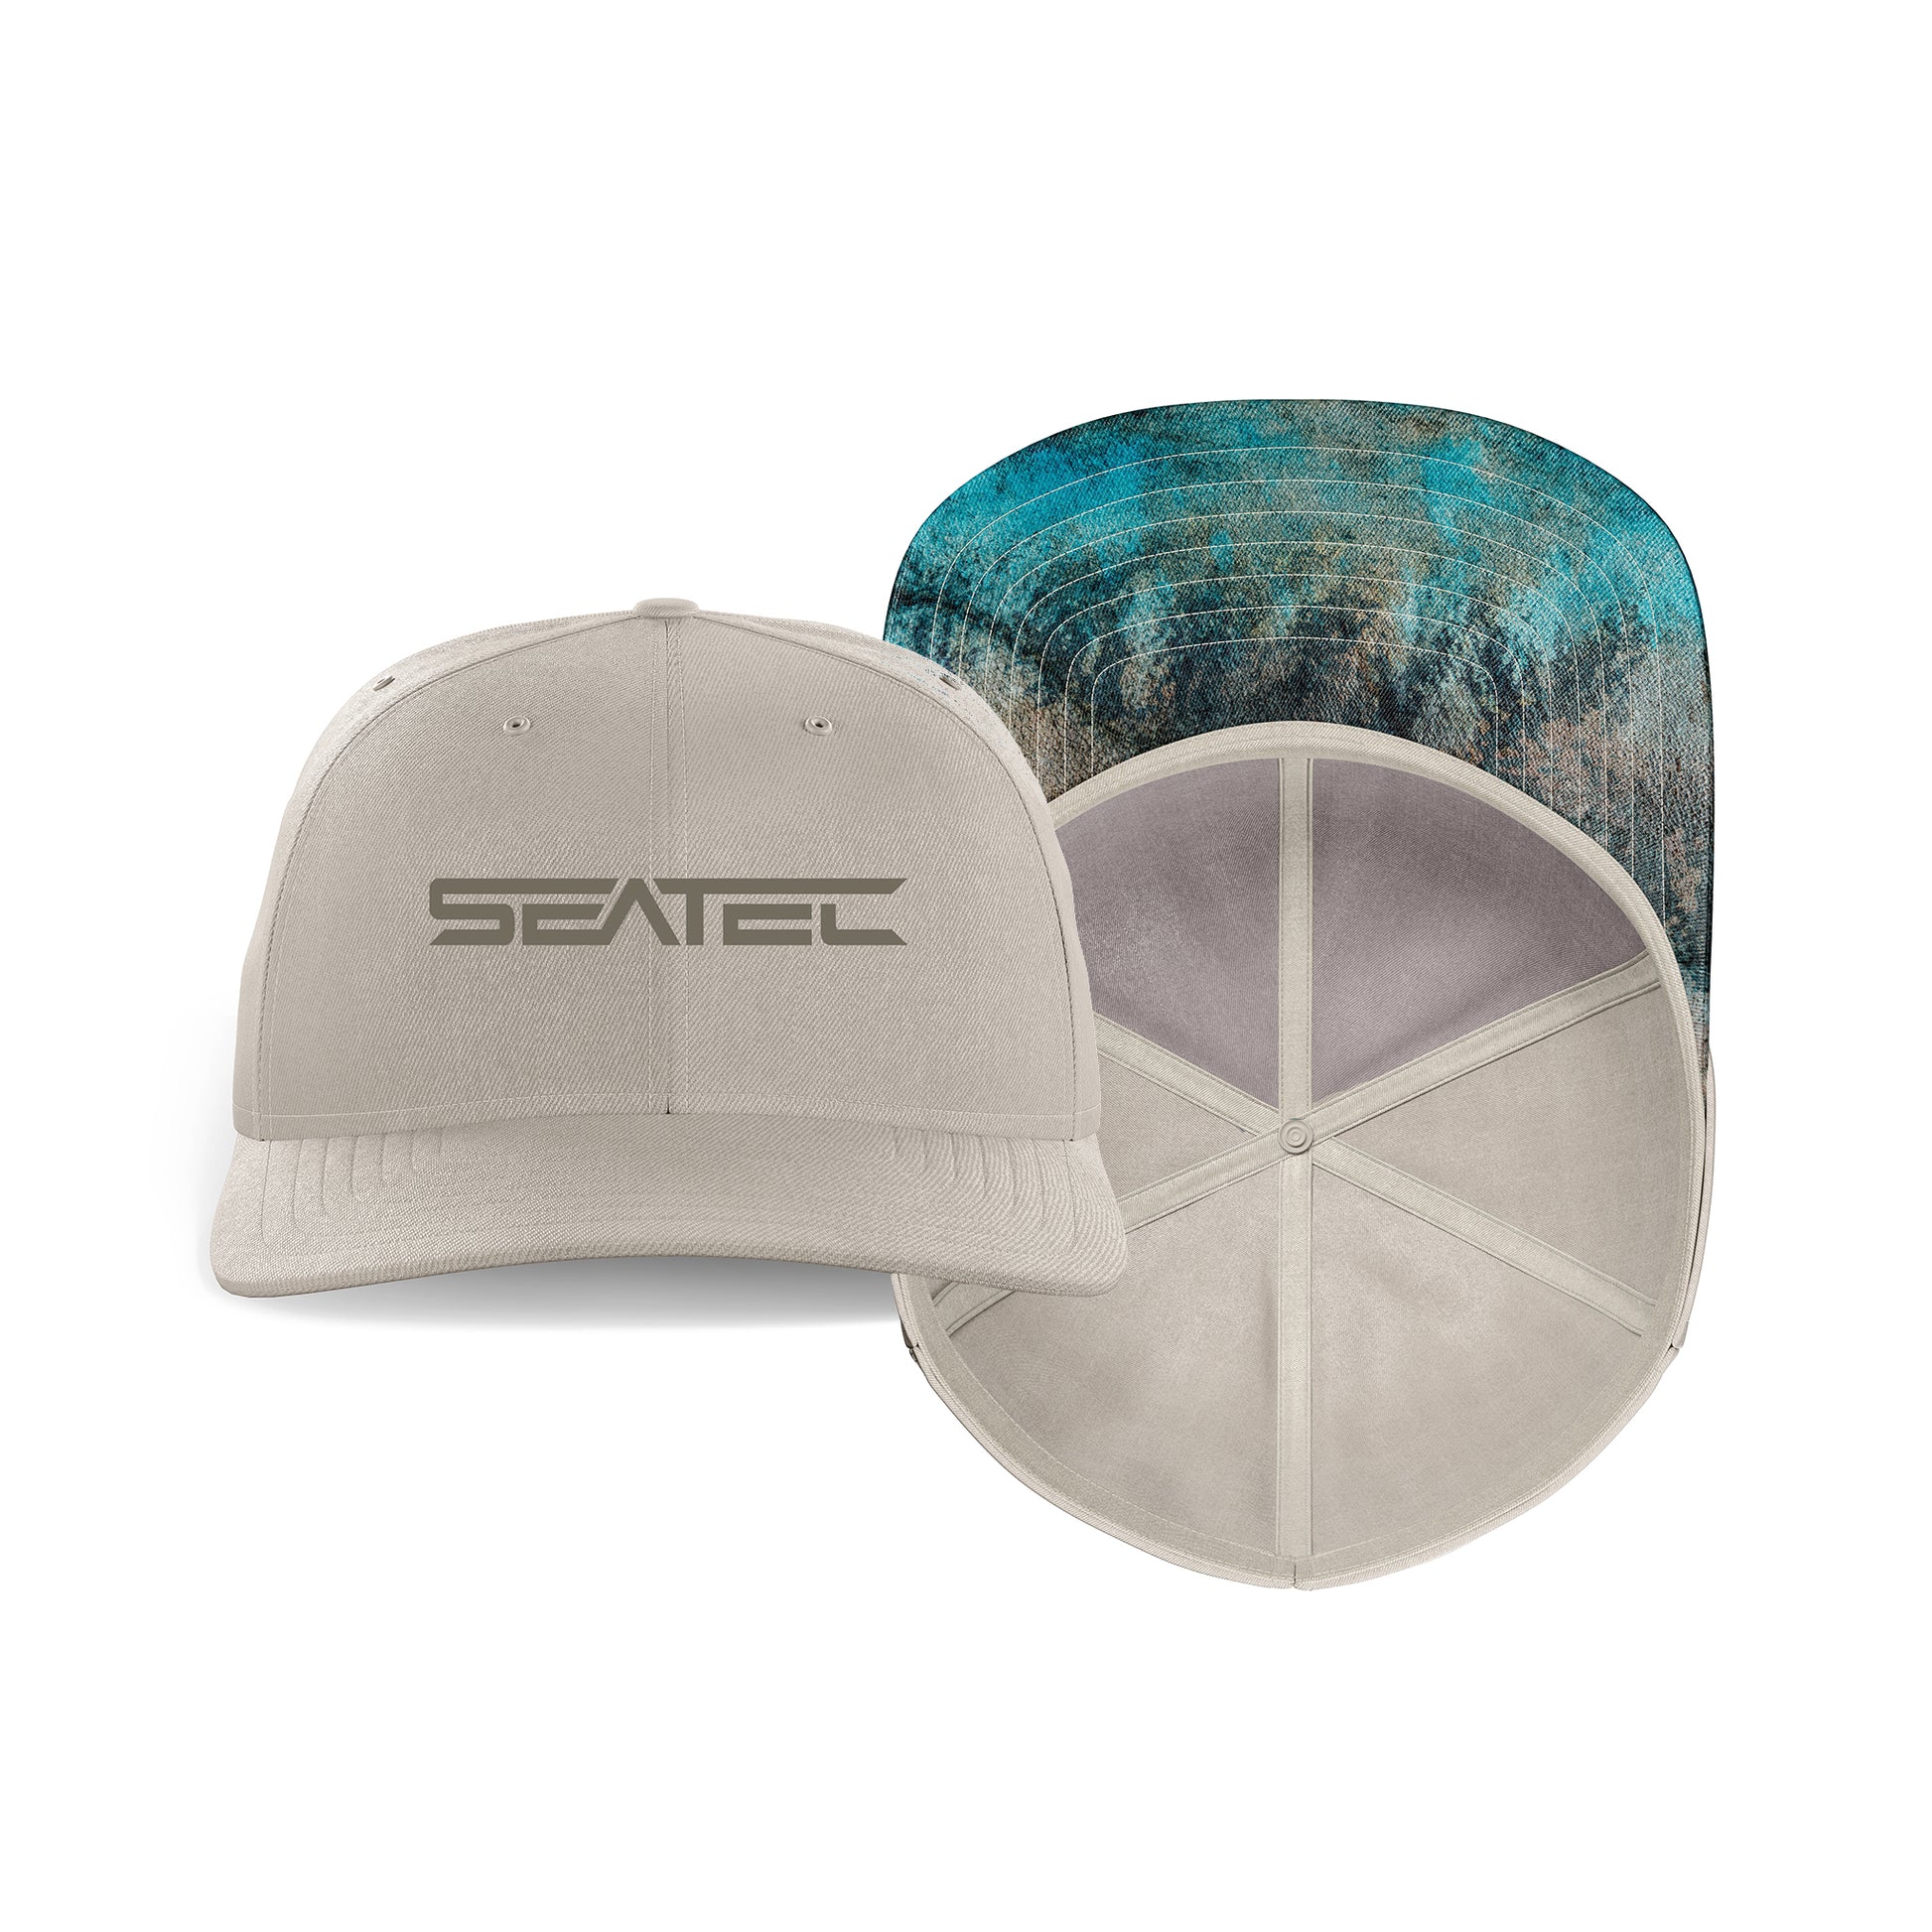 Seatec Outfitters Kingfish Mesh Snapback Cap - Tri Tec Performance Headwear